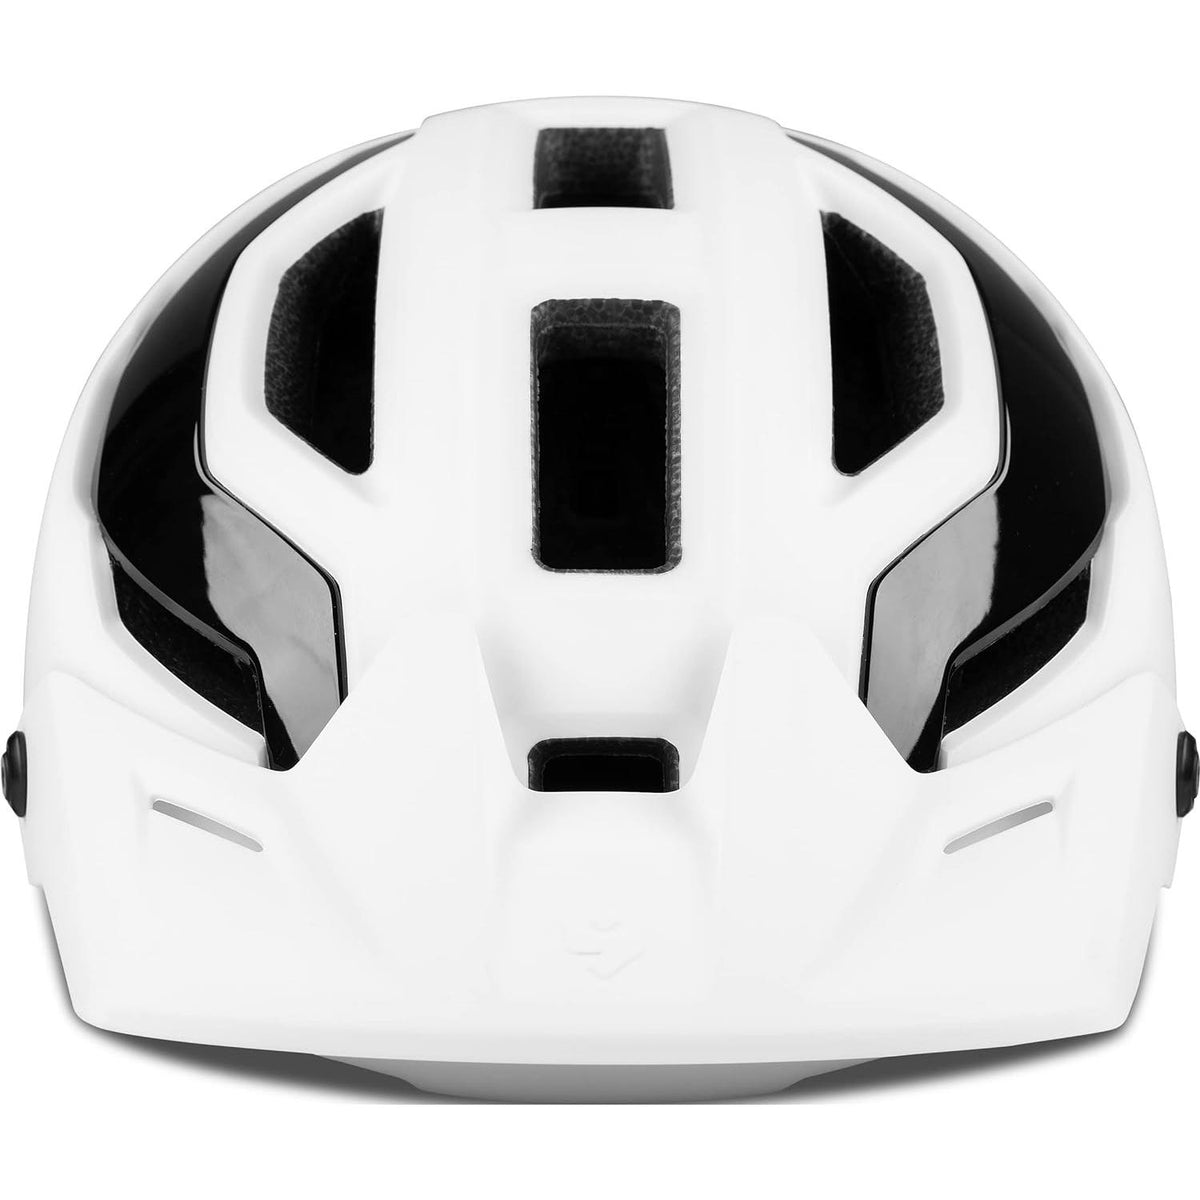 Sweet Protection Trailblazer Helmet